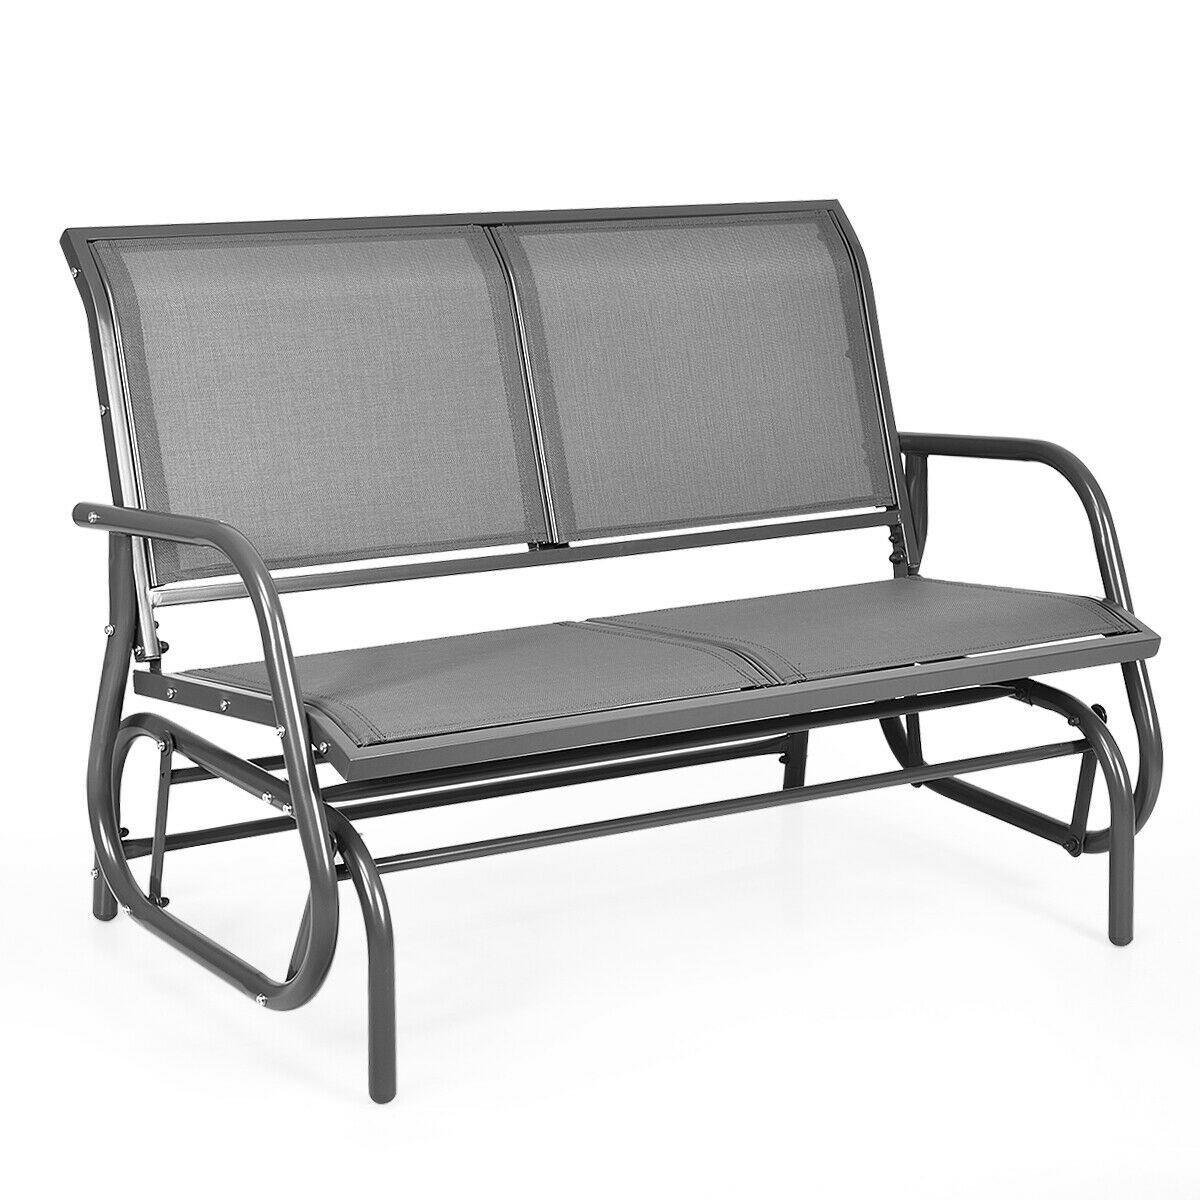 Gymax 48'' Outdoor Patio Swing Glider Bench Chair Loveseat Rocker Lounge Backyard Grey - image 5 of 10